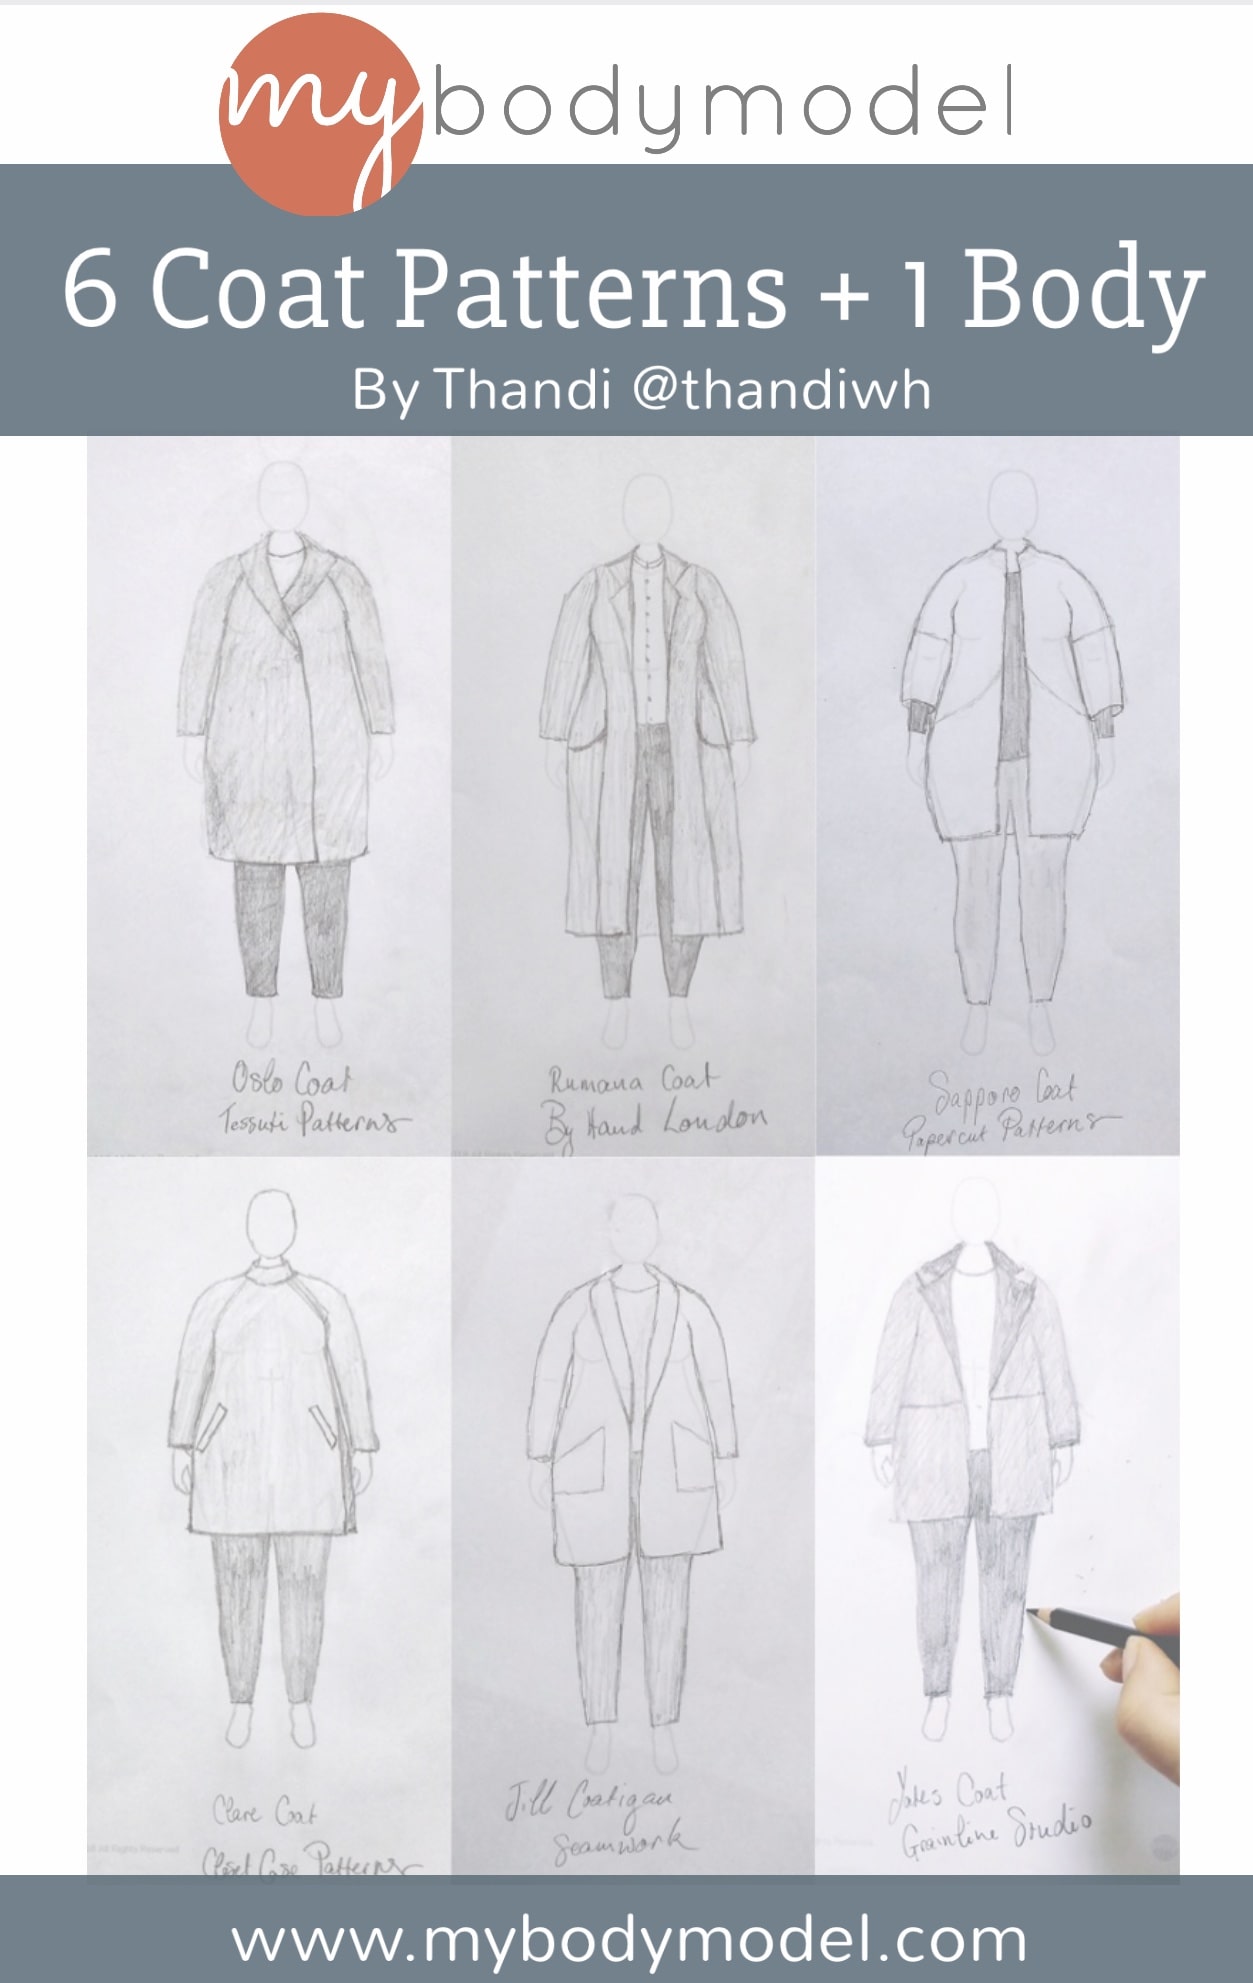 6 Coat Patterns 1 Body by Thandi